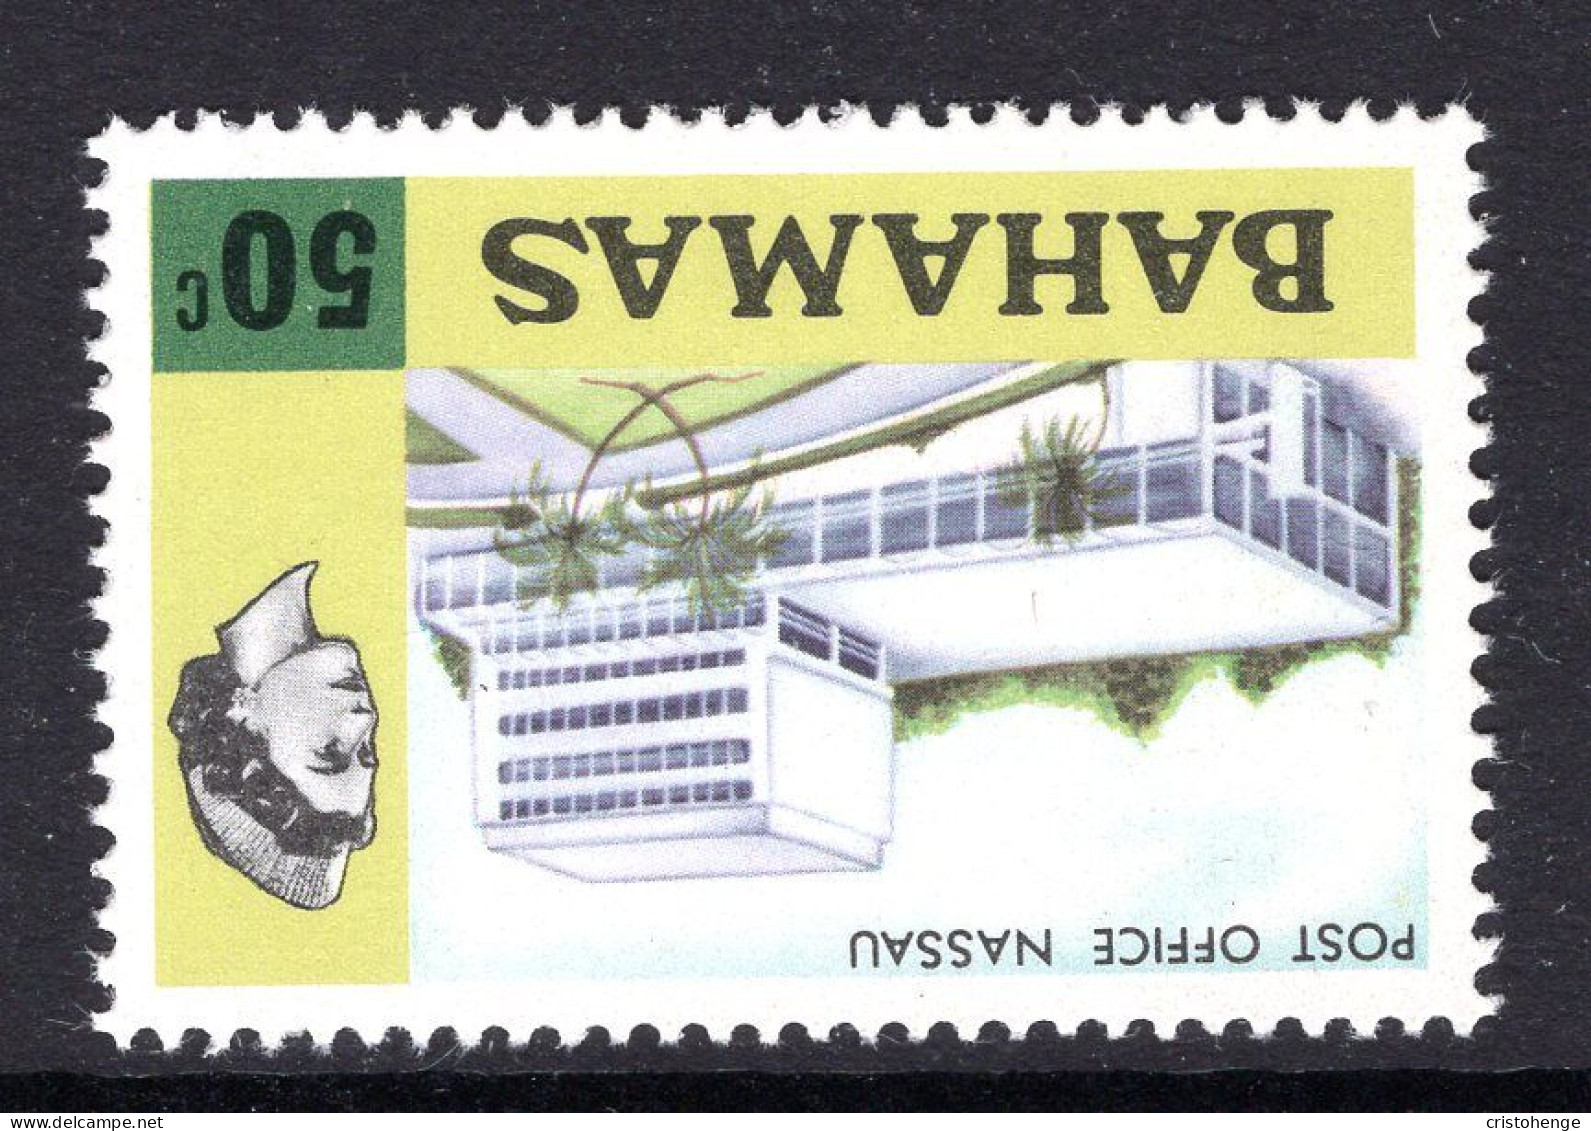 Bahamas 1972-73 Pictorials - 50c Post Office- Wmk. Crown To Left Of CA - MNH (SG 397w) - 1963-1973 Interne Autonomie